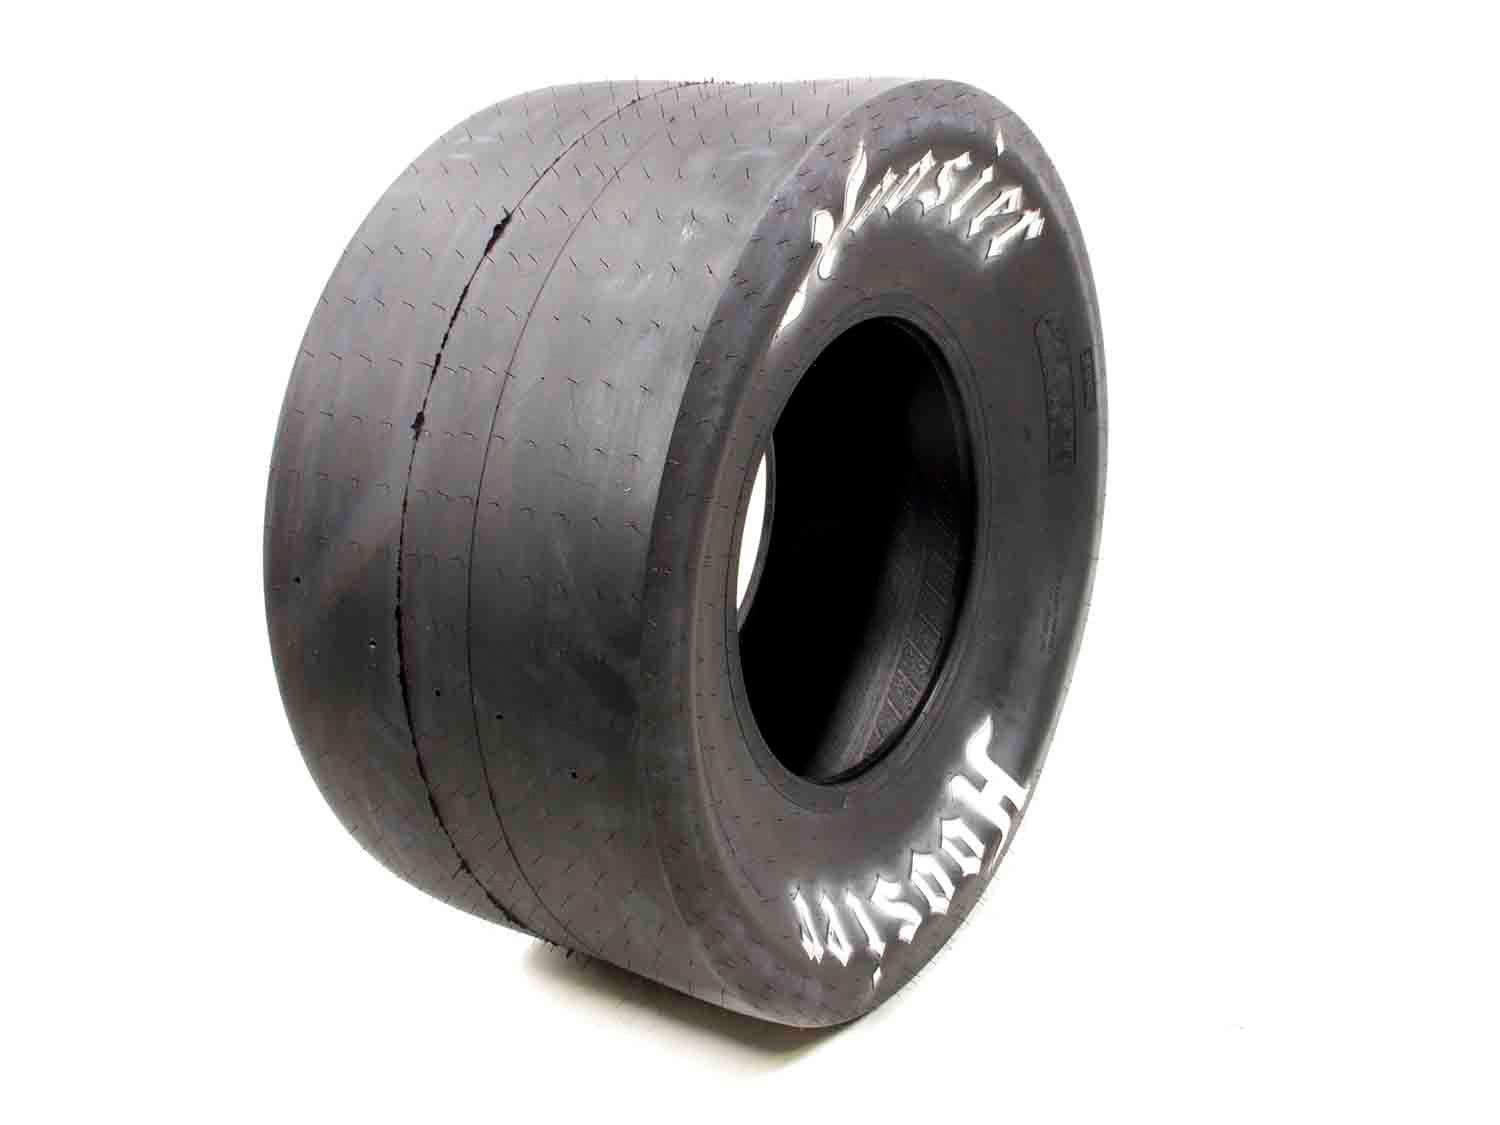 29.5/10.5-15 Drag Tire - Burlile Performance Products